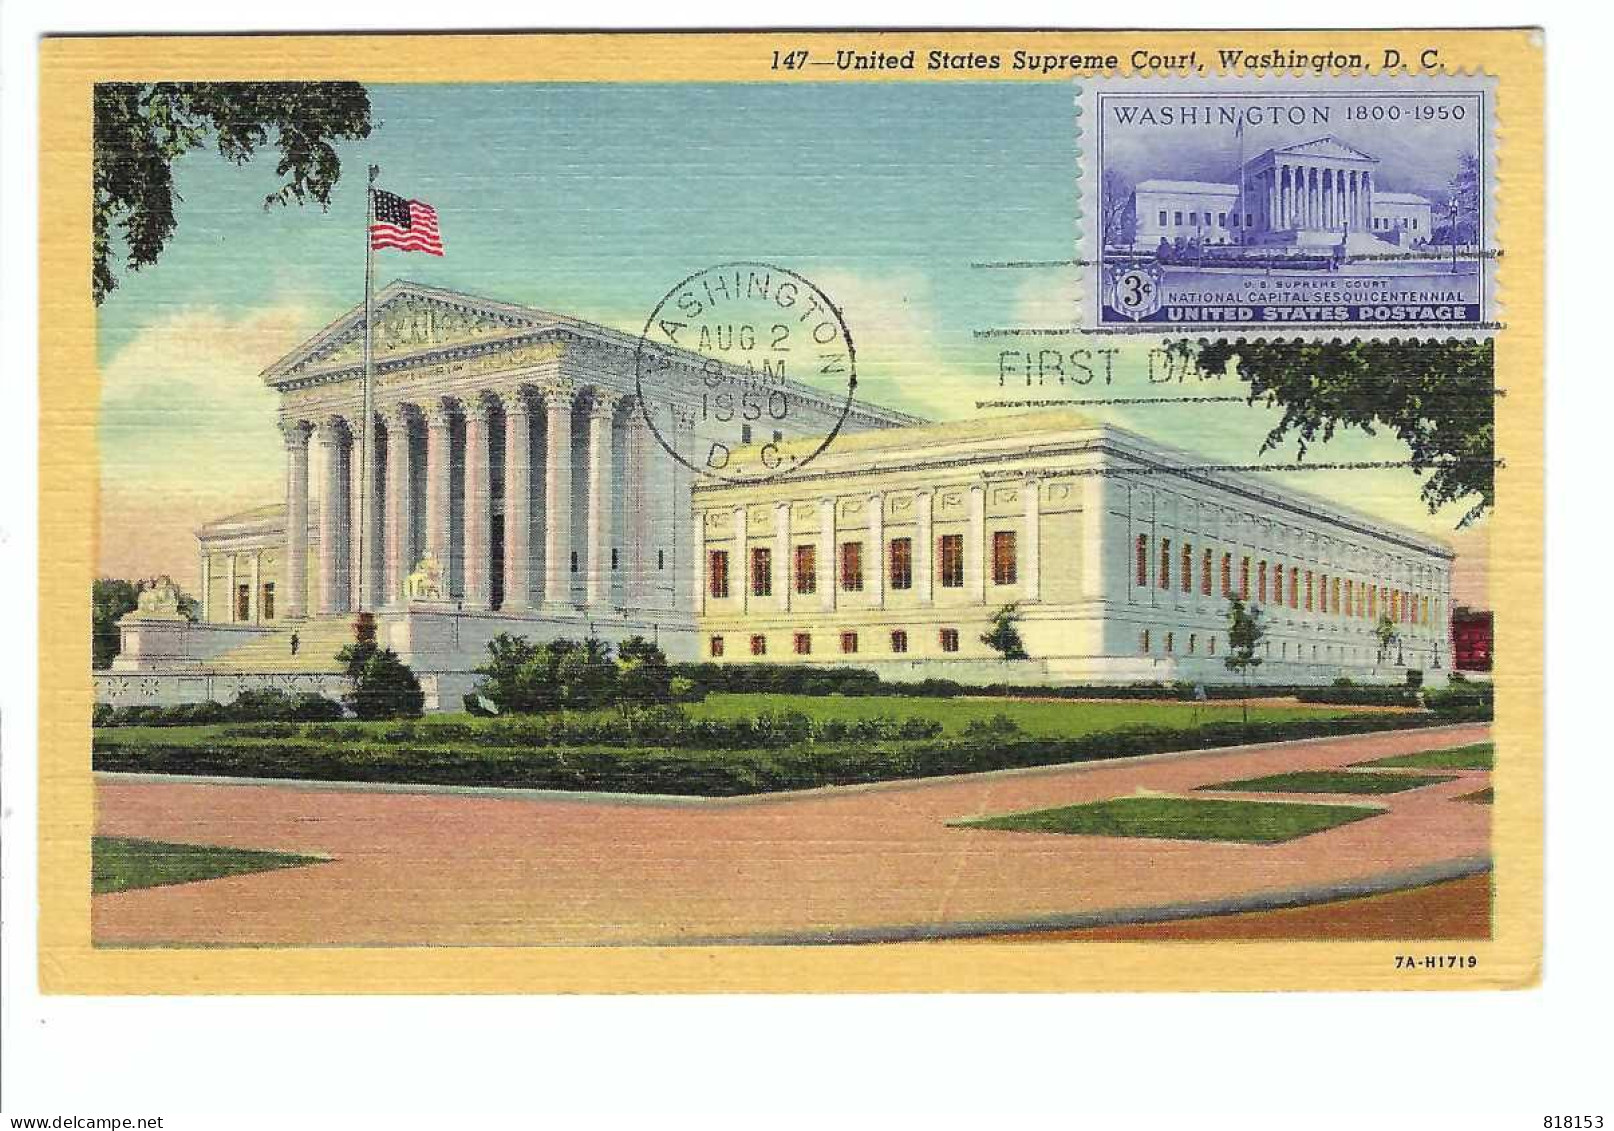 FDC  147 - United States Supreme Court , Washington D C     AUG 2 1950 - Used Stamps